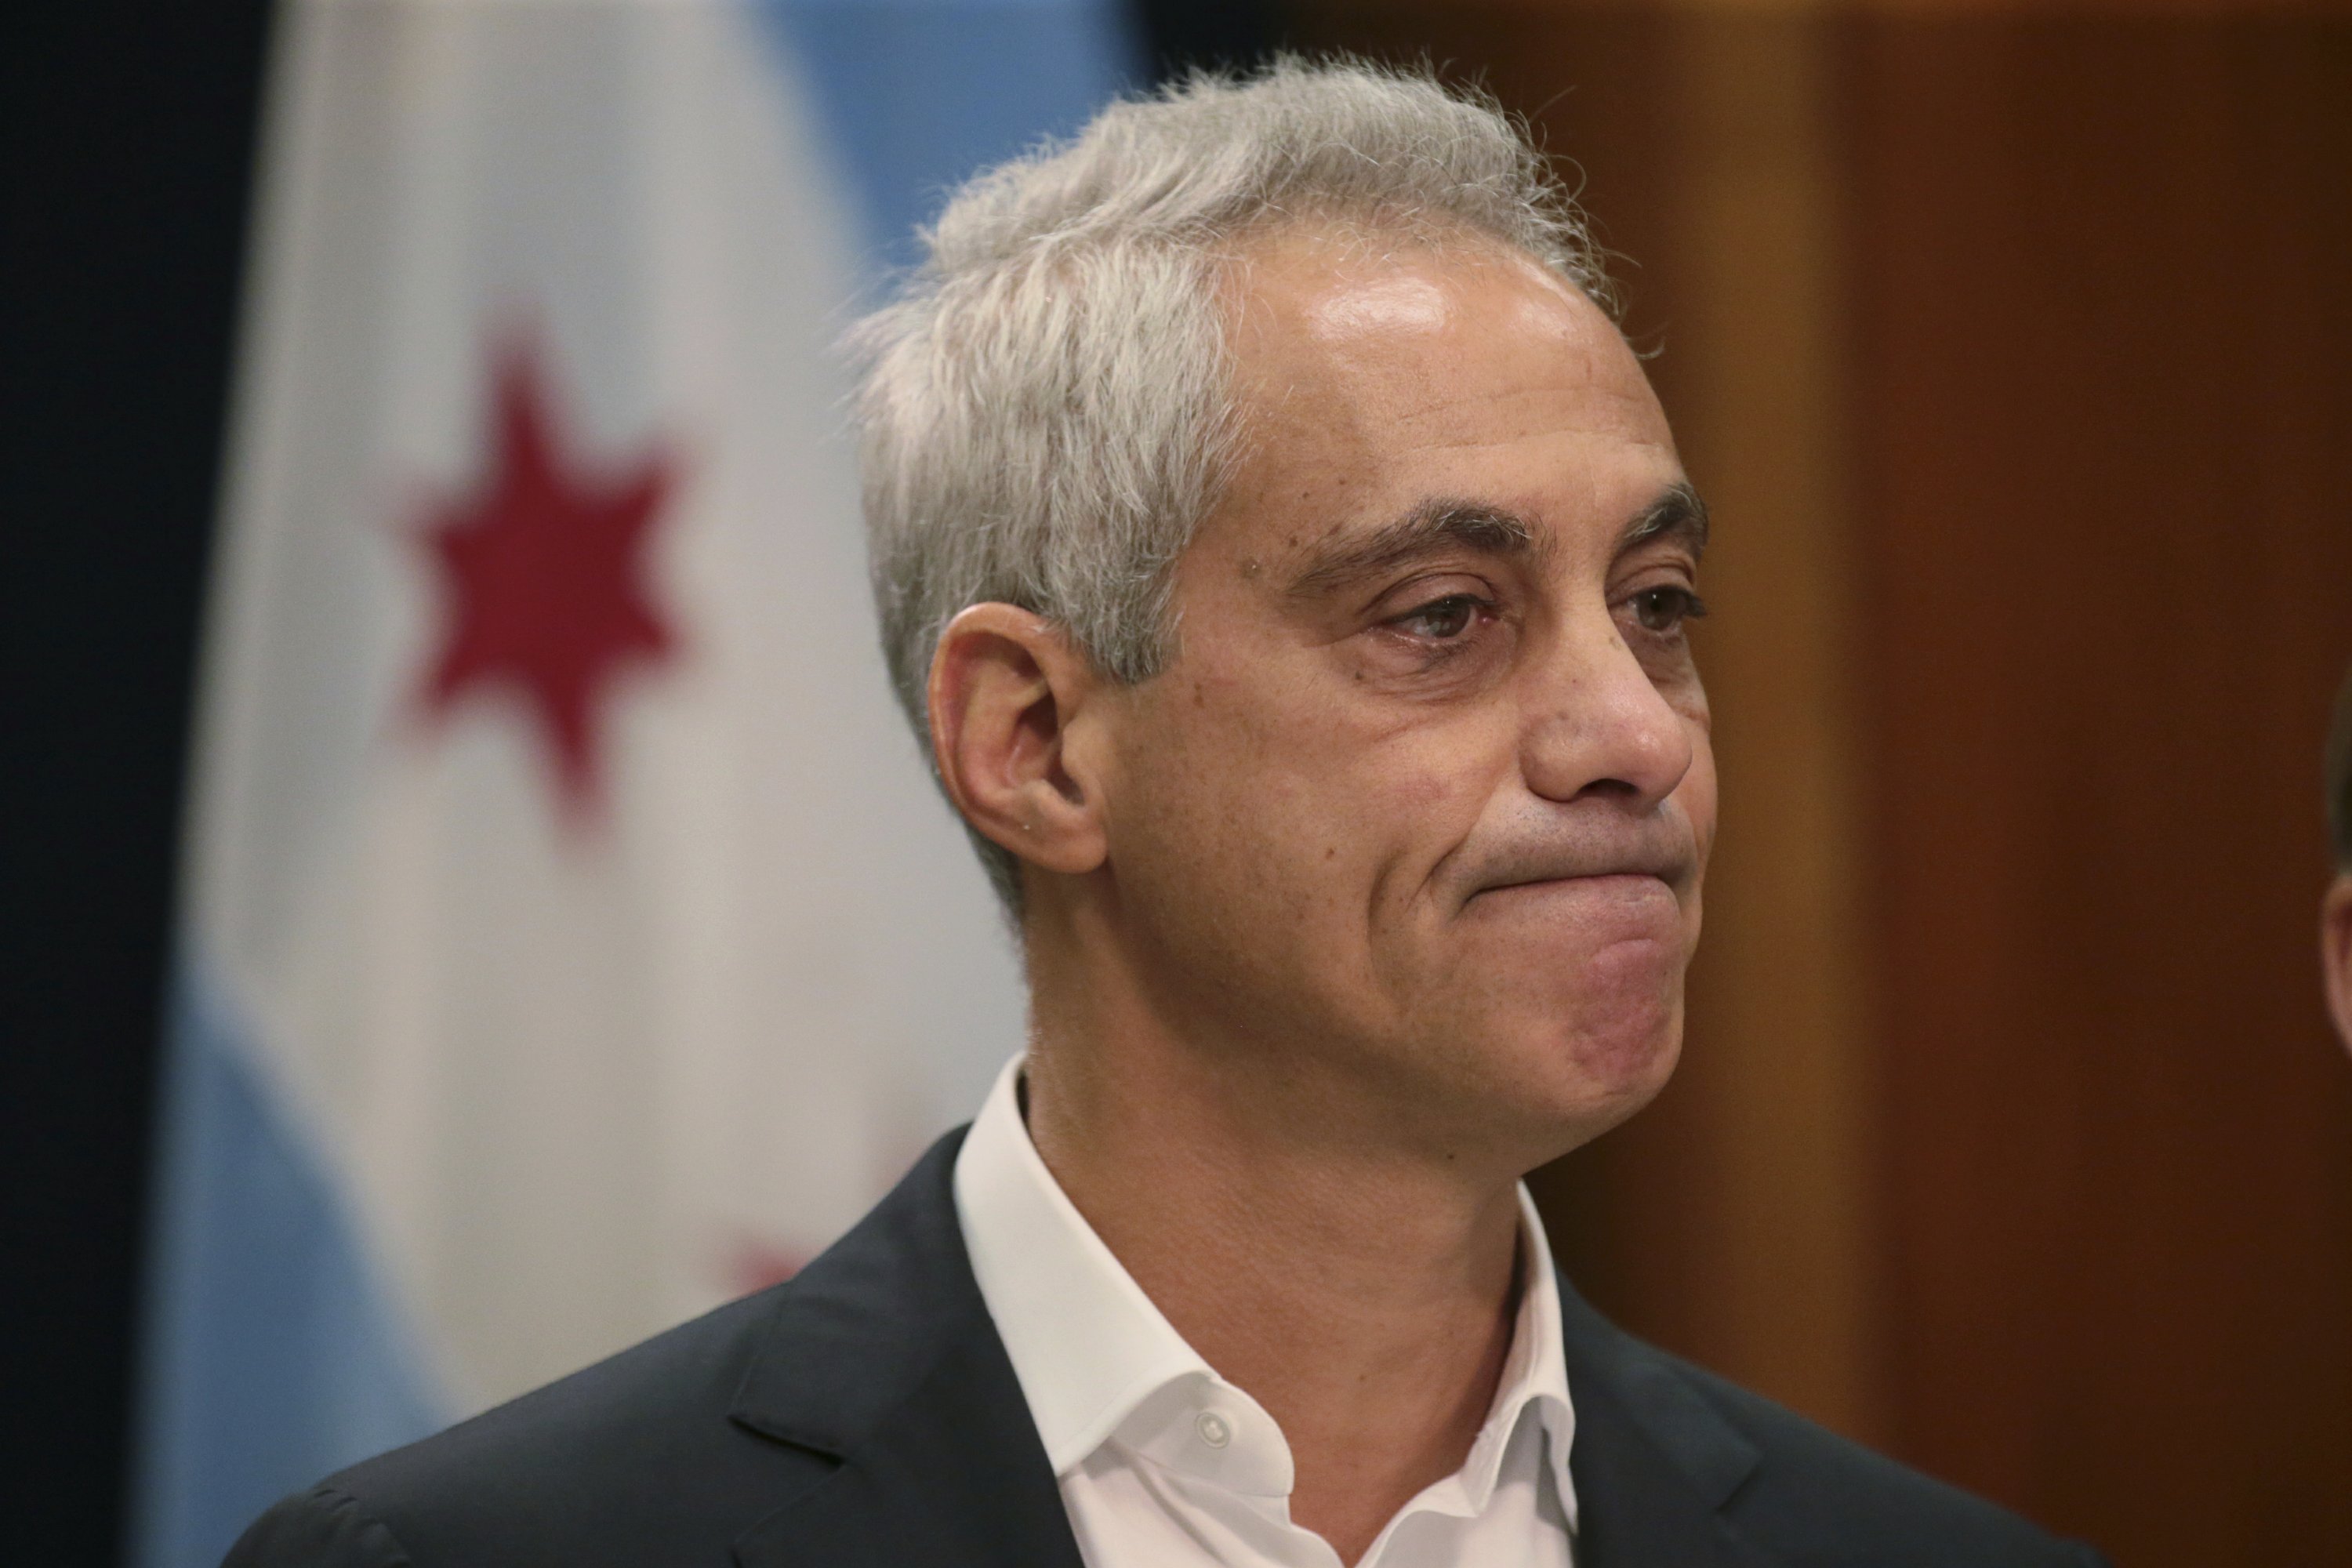 Chicago Mayor Rahm Emanuel abandons quest for third term